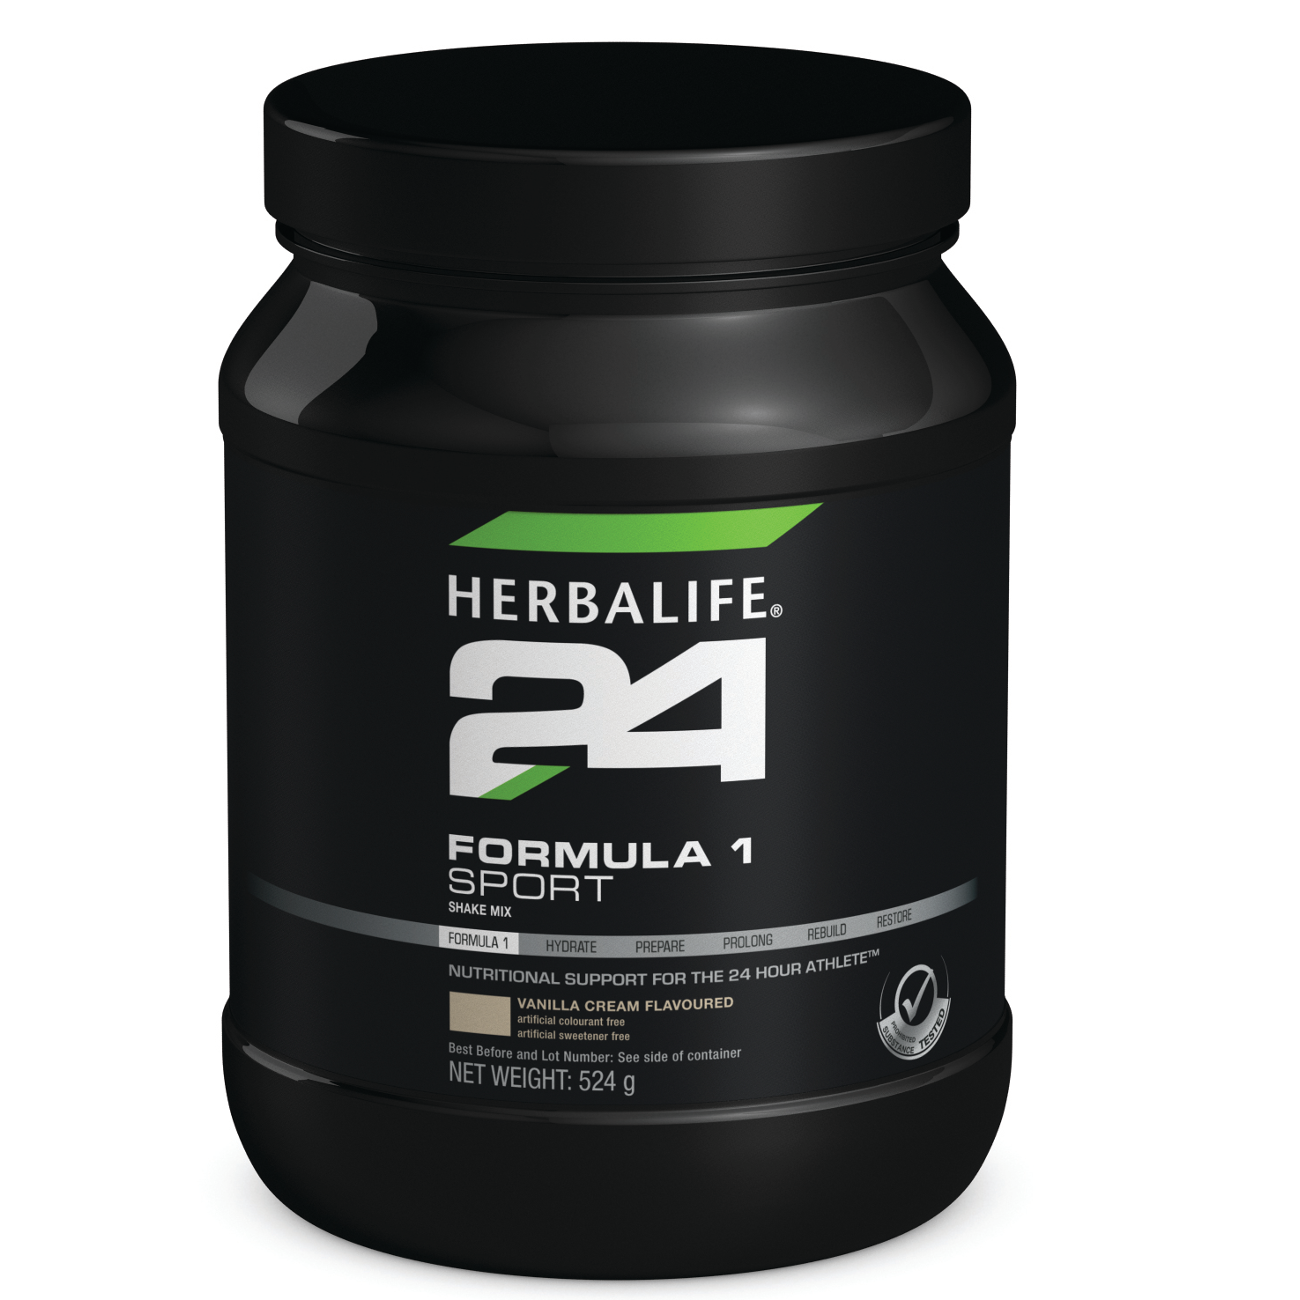 Herbalife24® Formula 1 Sports Shake Mix Vanilla Cream Flavoured product shot